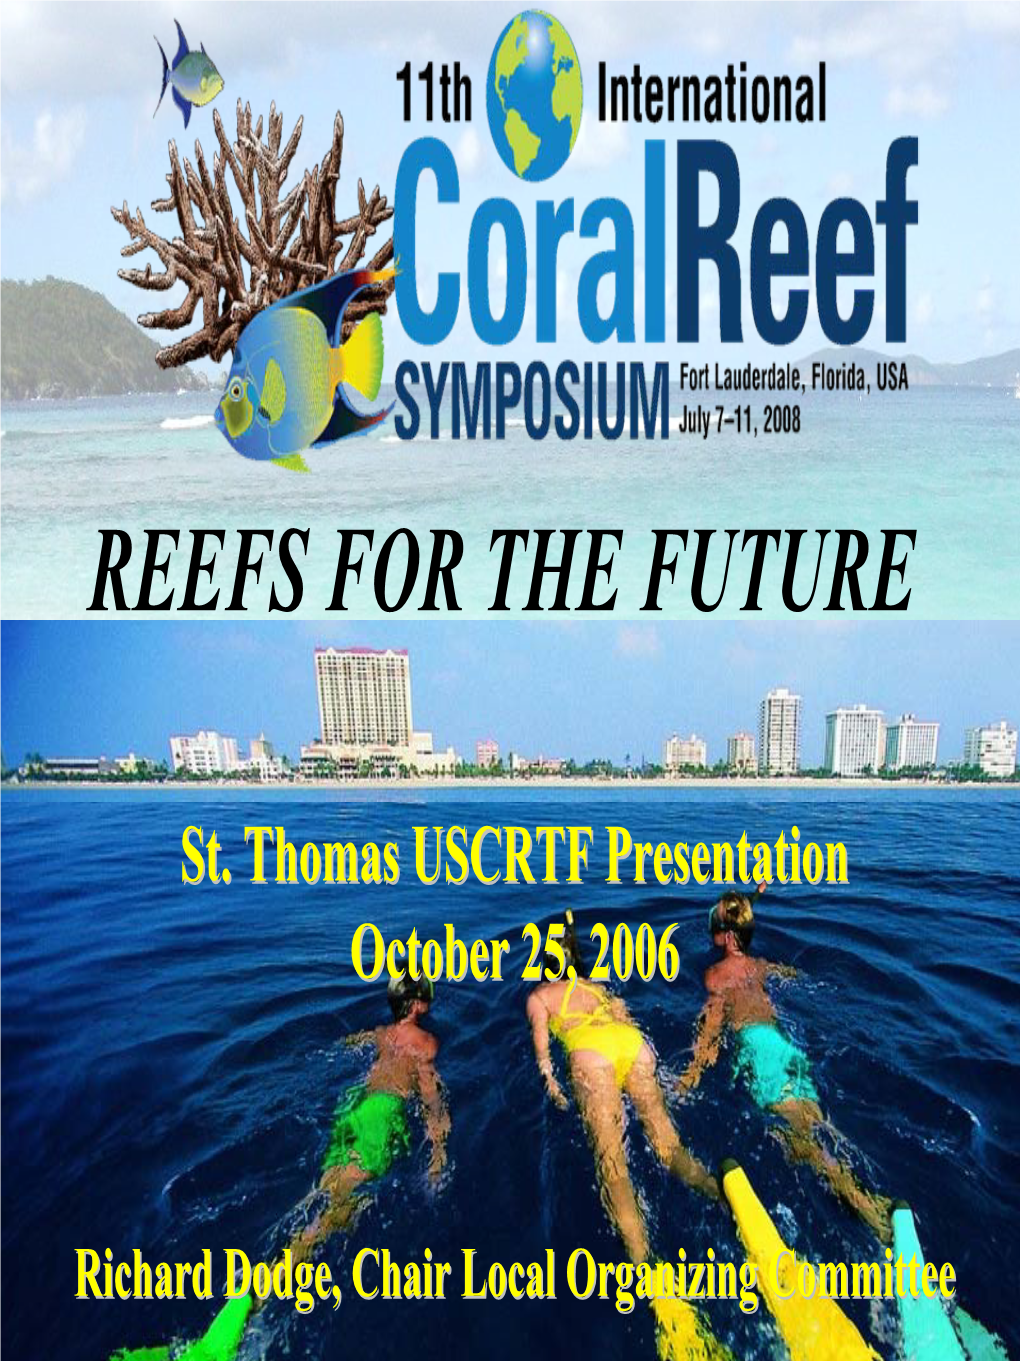 International Coral Reef Symposium